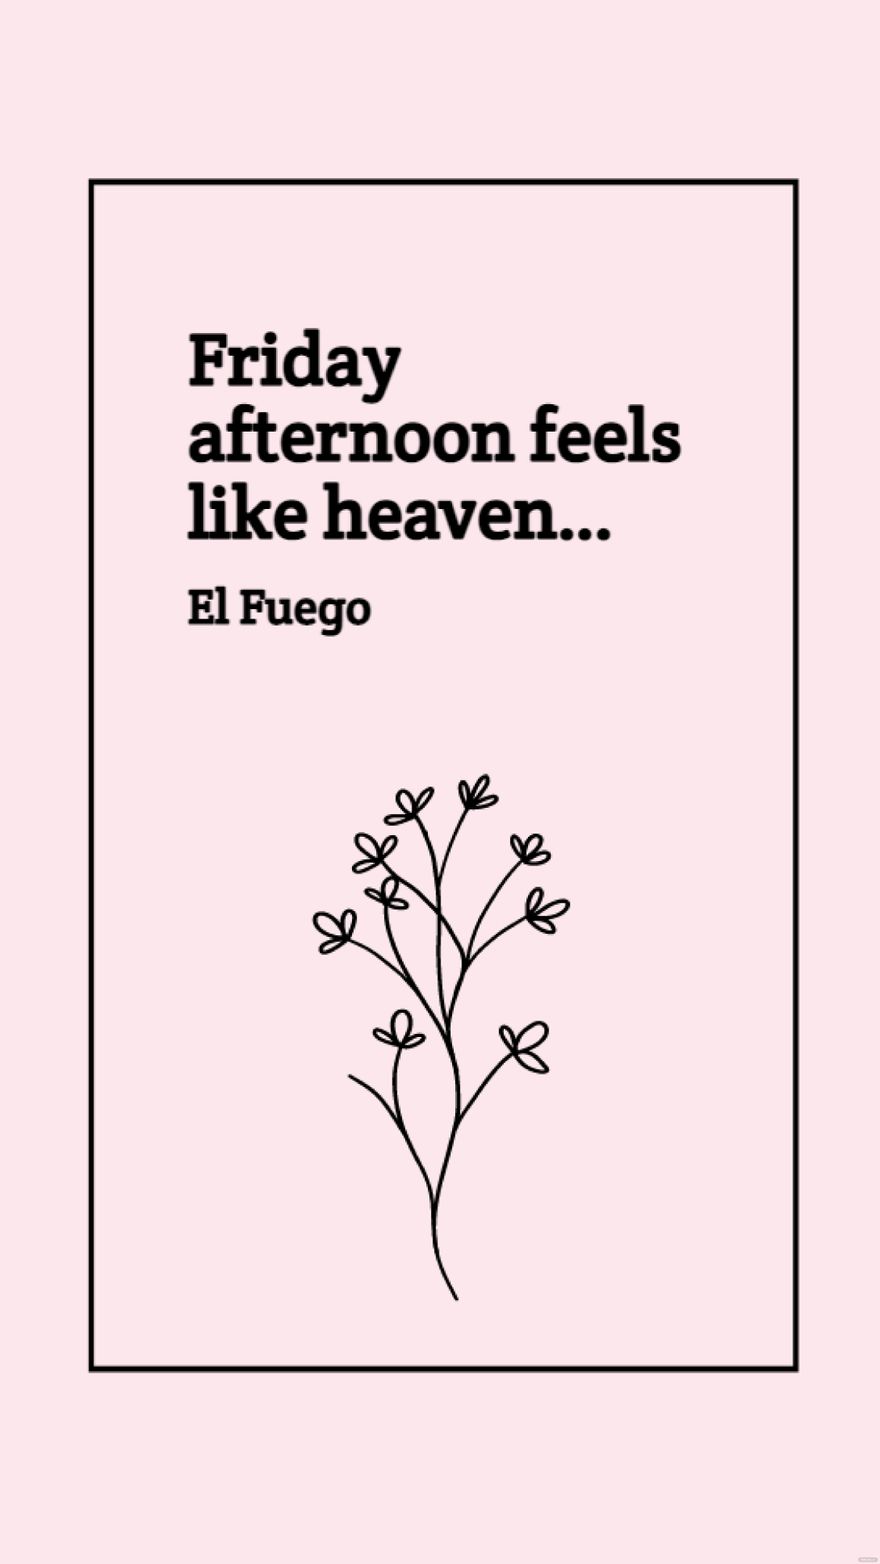 Free El Fuego - Friday afternoon feels like heaven… in JPG